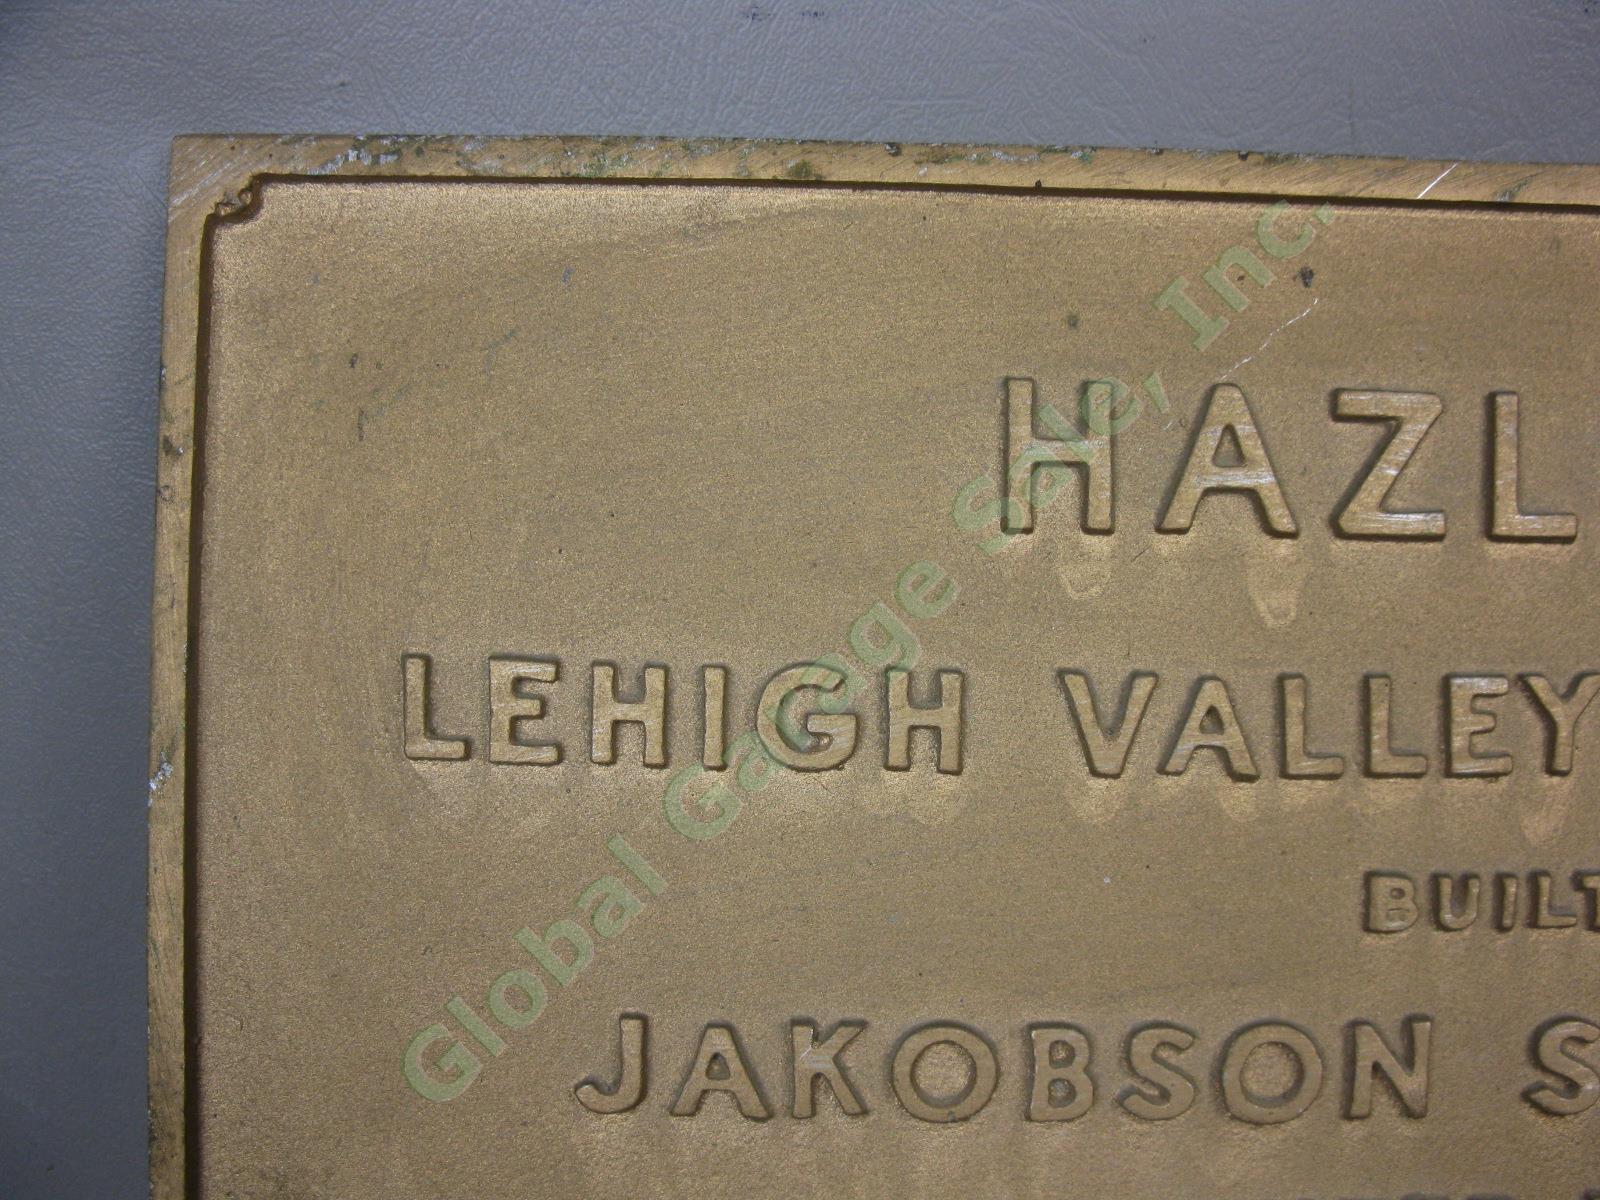 1950 Hazleton Lehigh Valley Railroad Tugboat Builder